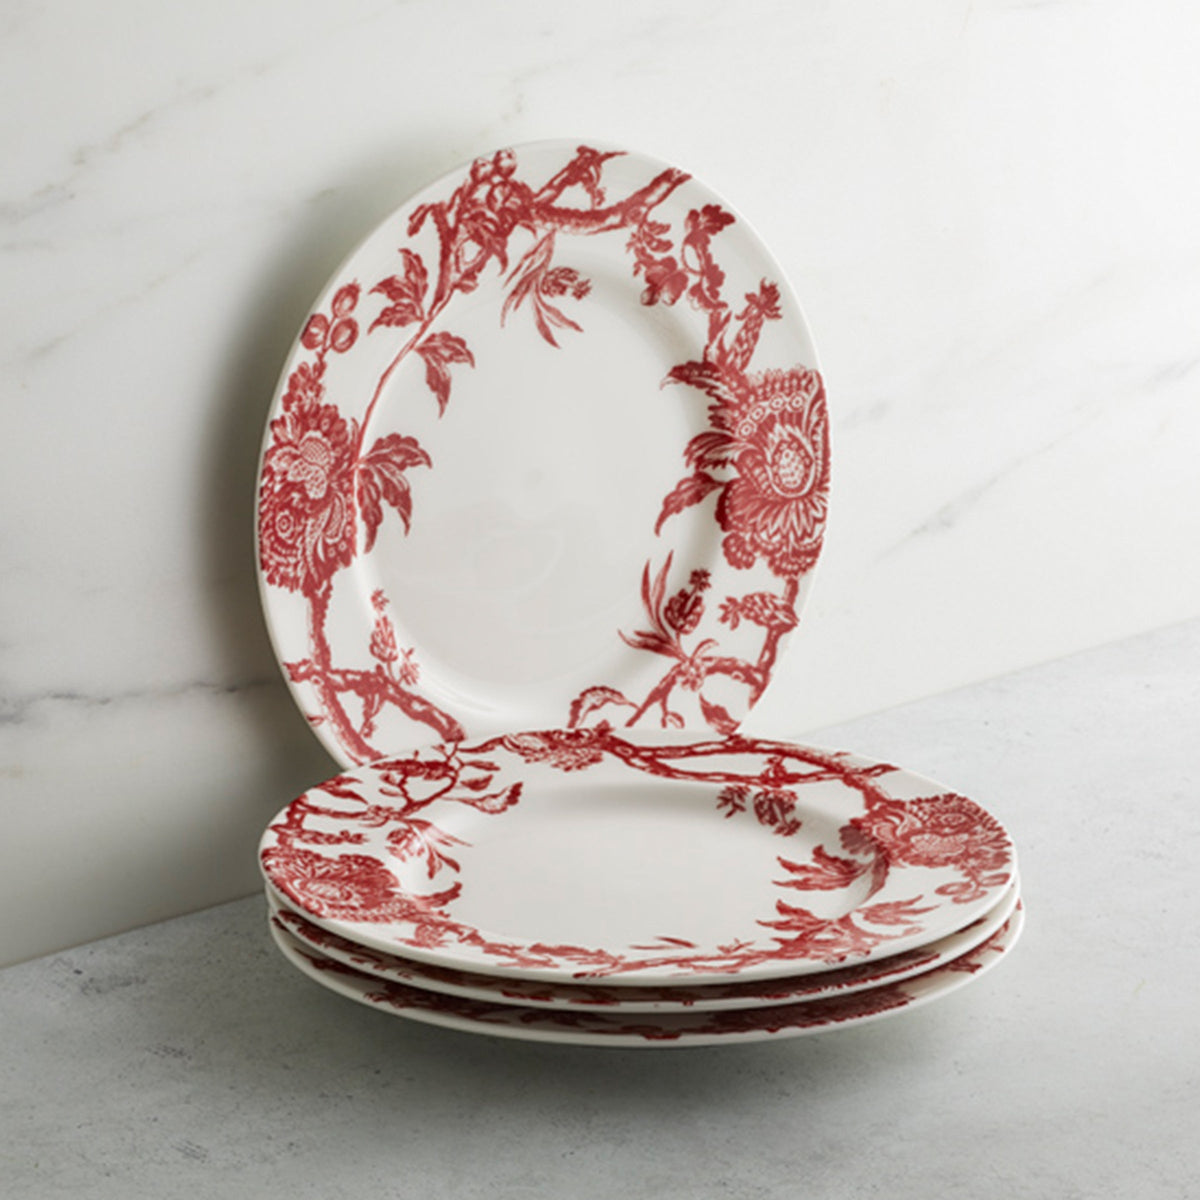 A stack of three Caskata Artisanal Home Arcadia Crimson Rimmed Salad Plates, reminiscent of premium porcelain dinnerware, set against a marble background.